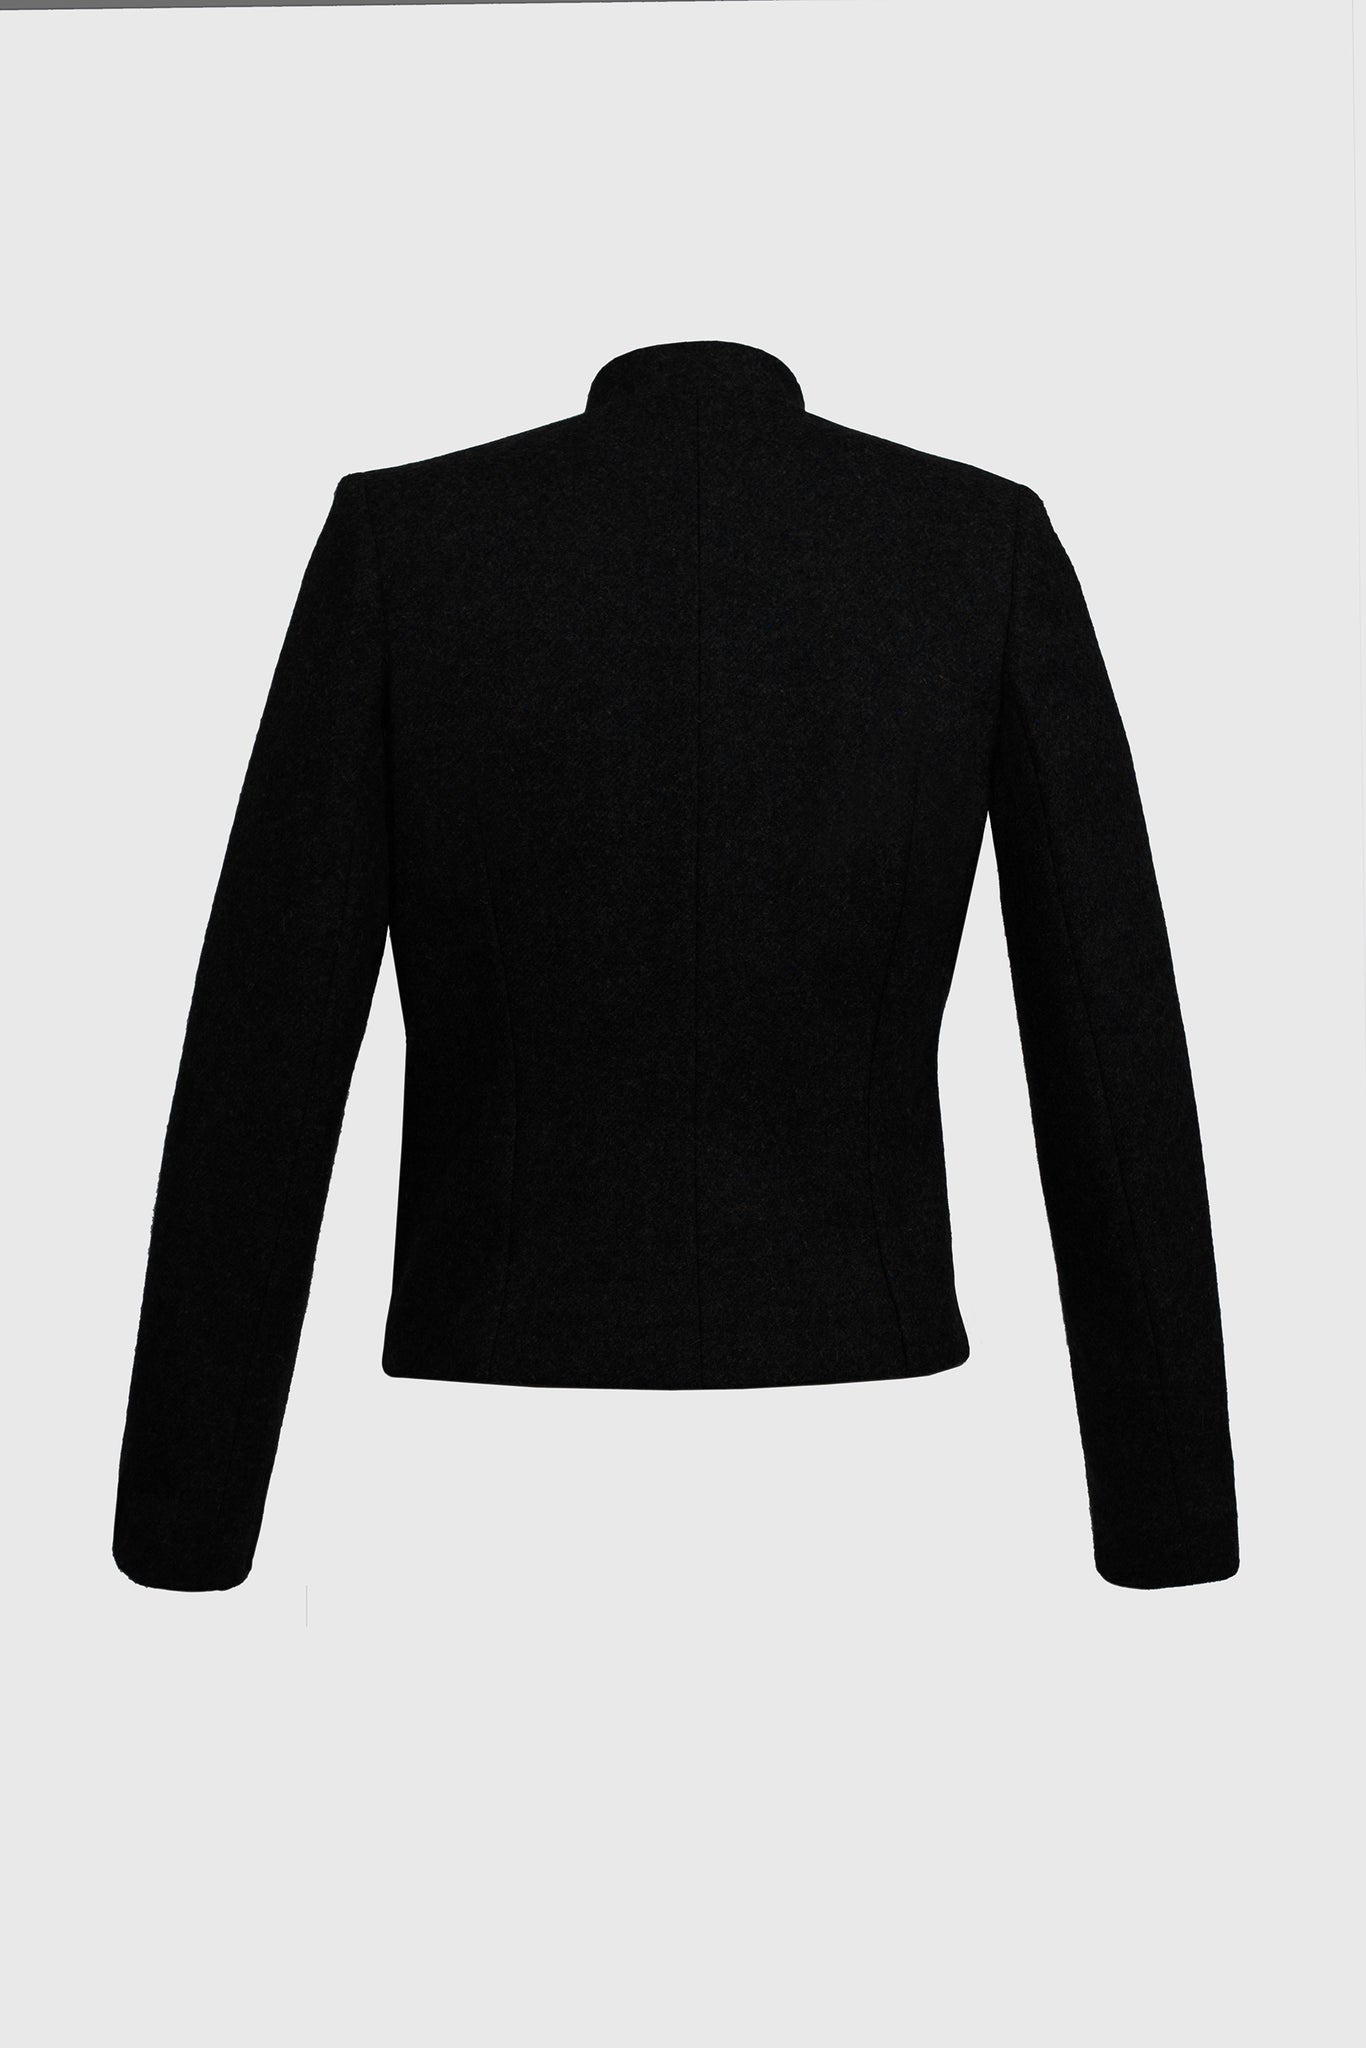 Asymmetrical Black Wool Jacket